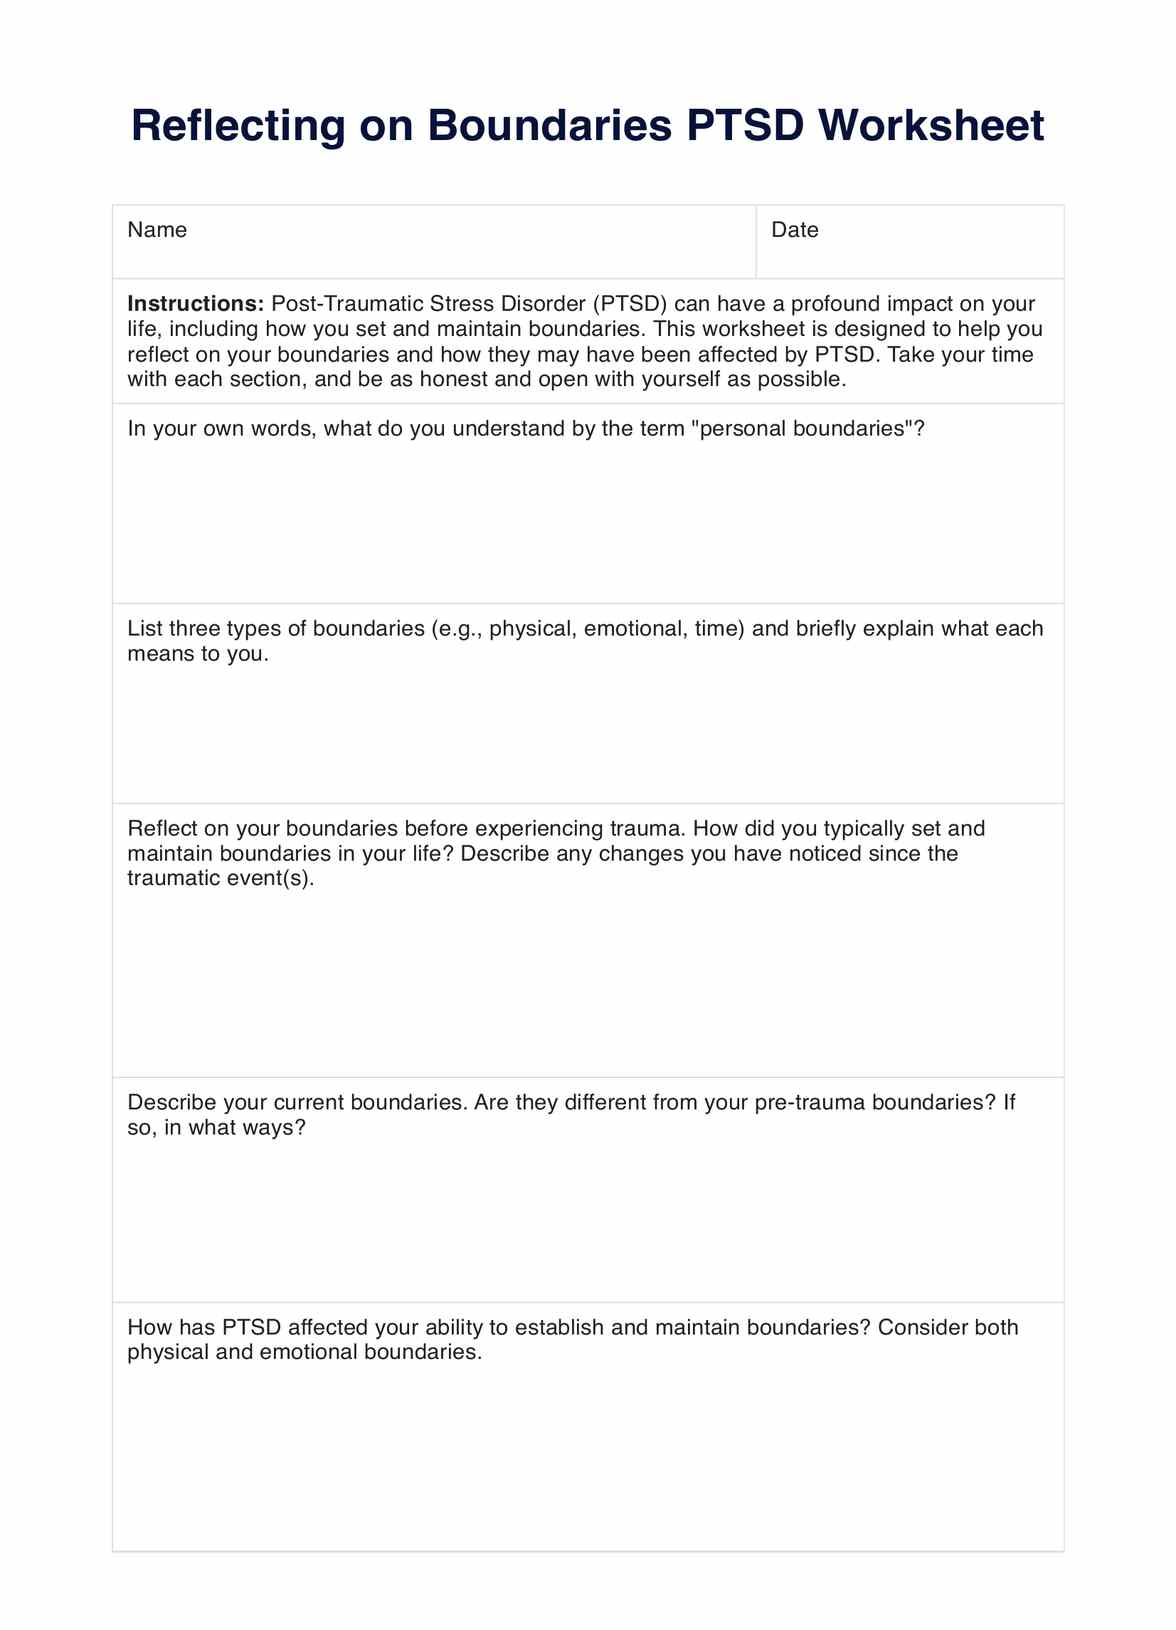 Reflecting on Boundaries PTSD Worksheet PDF Example